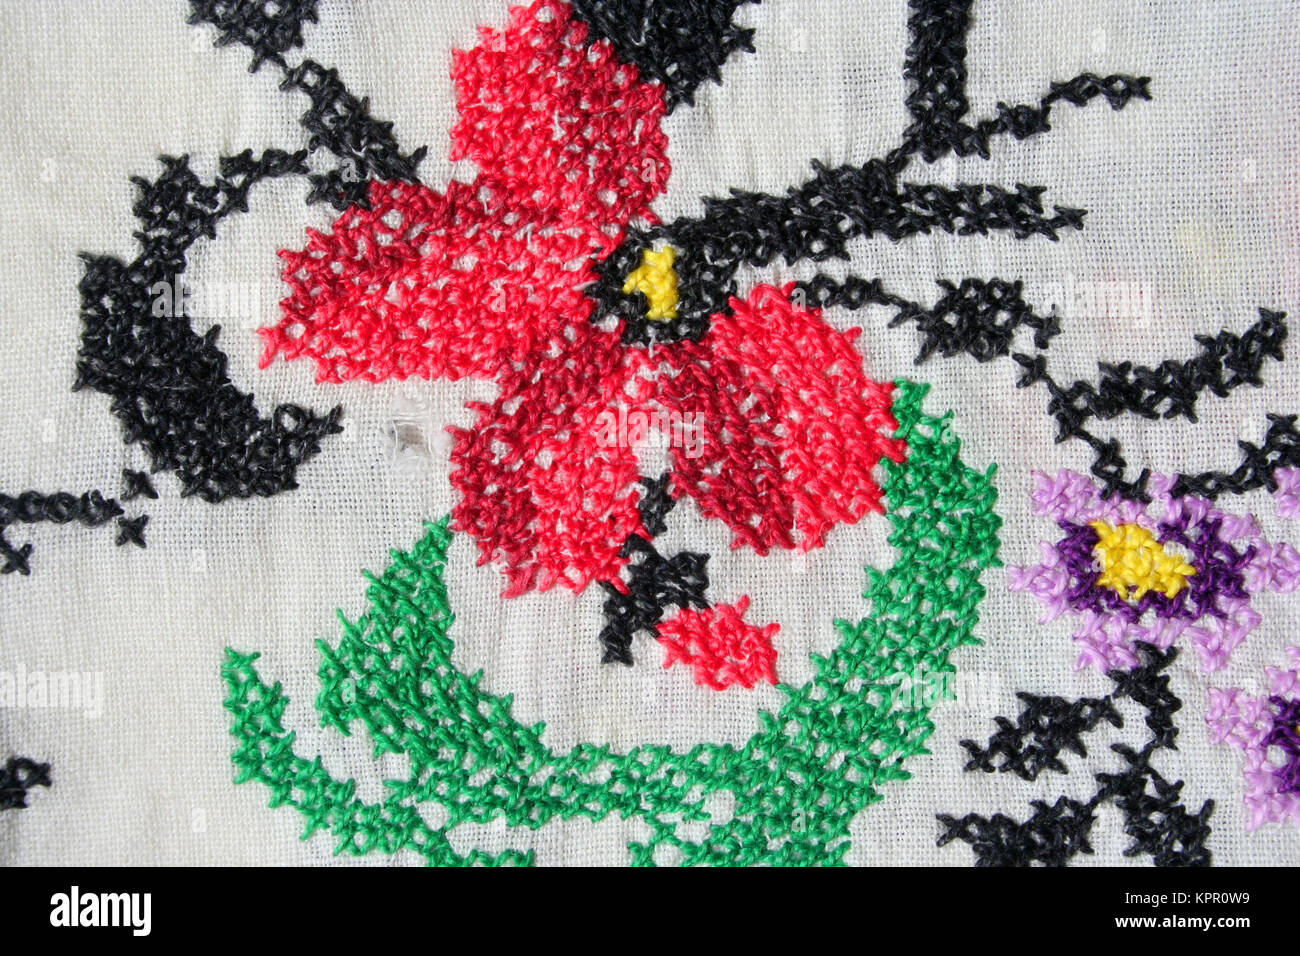 turkish embroidery Stock Photo